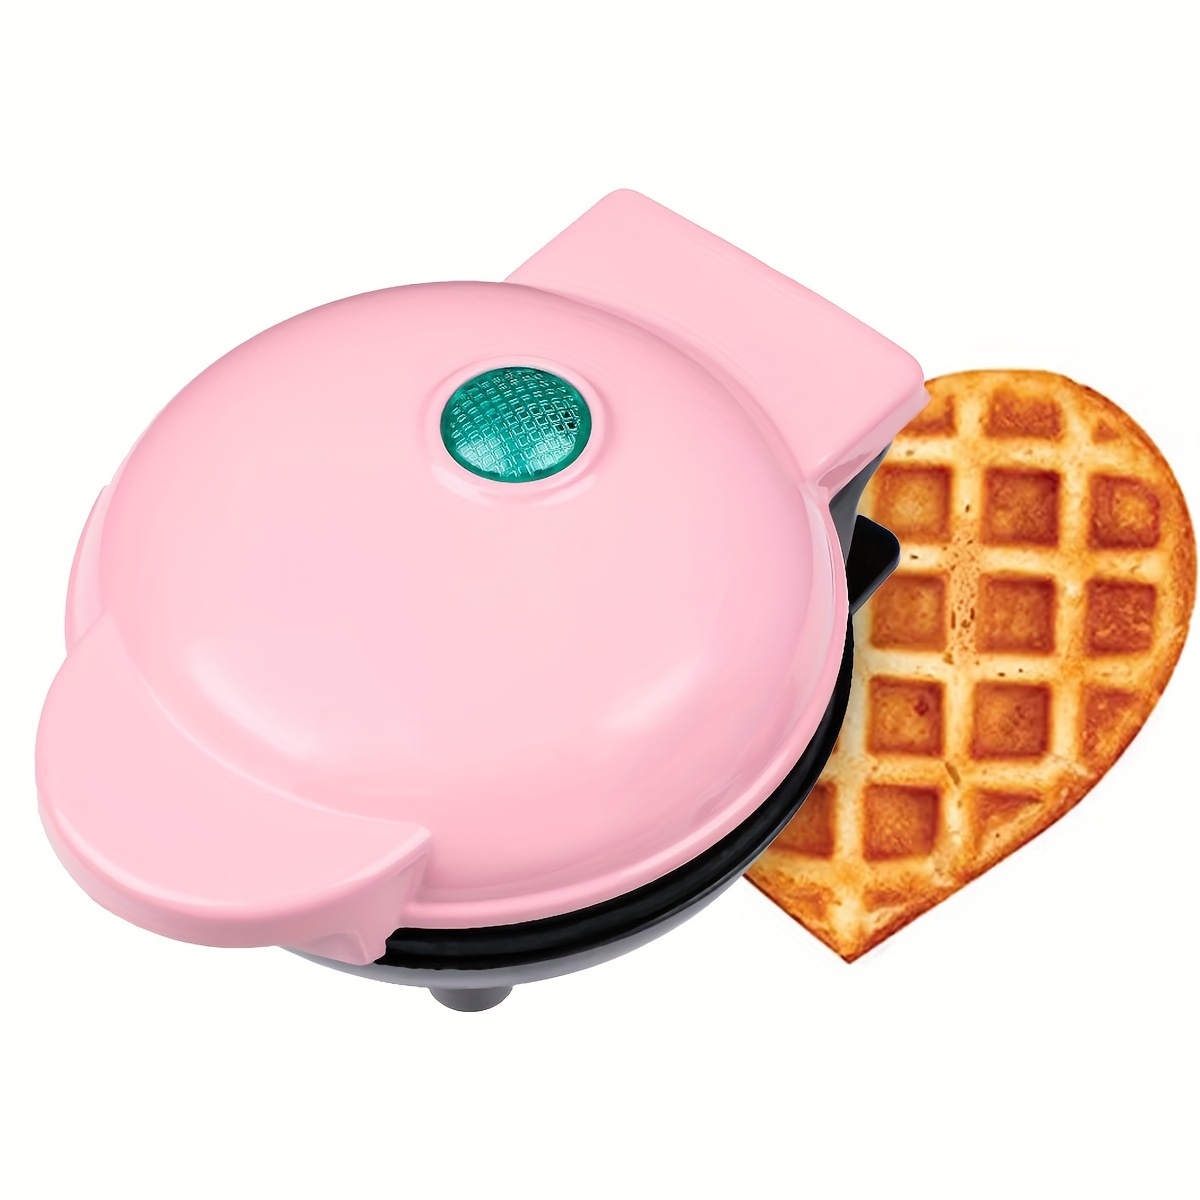 Dash Heart Mini Waffle Maker + Reviews